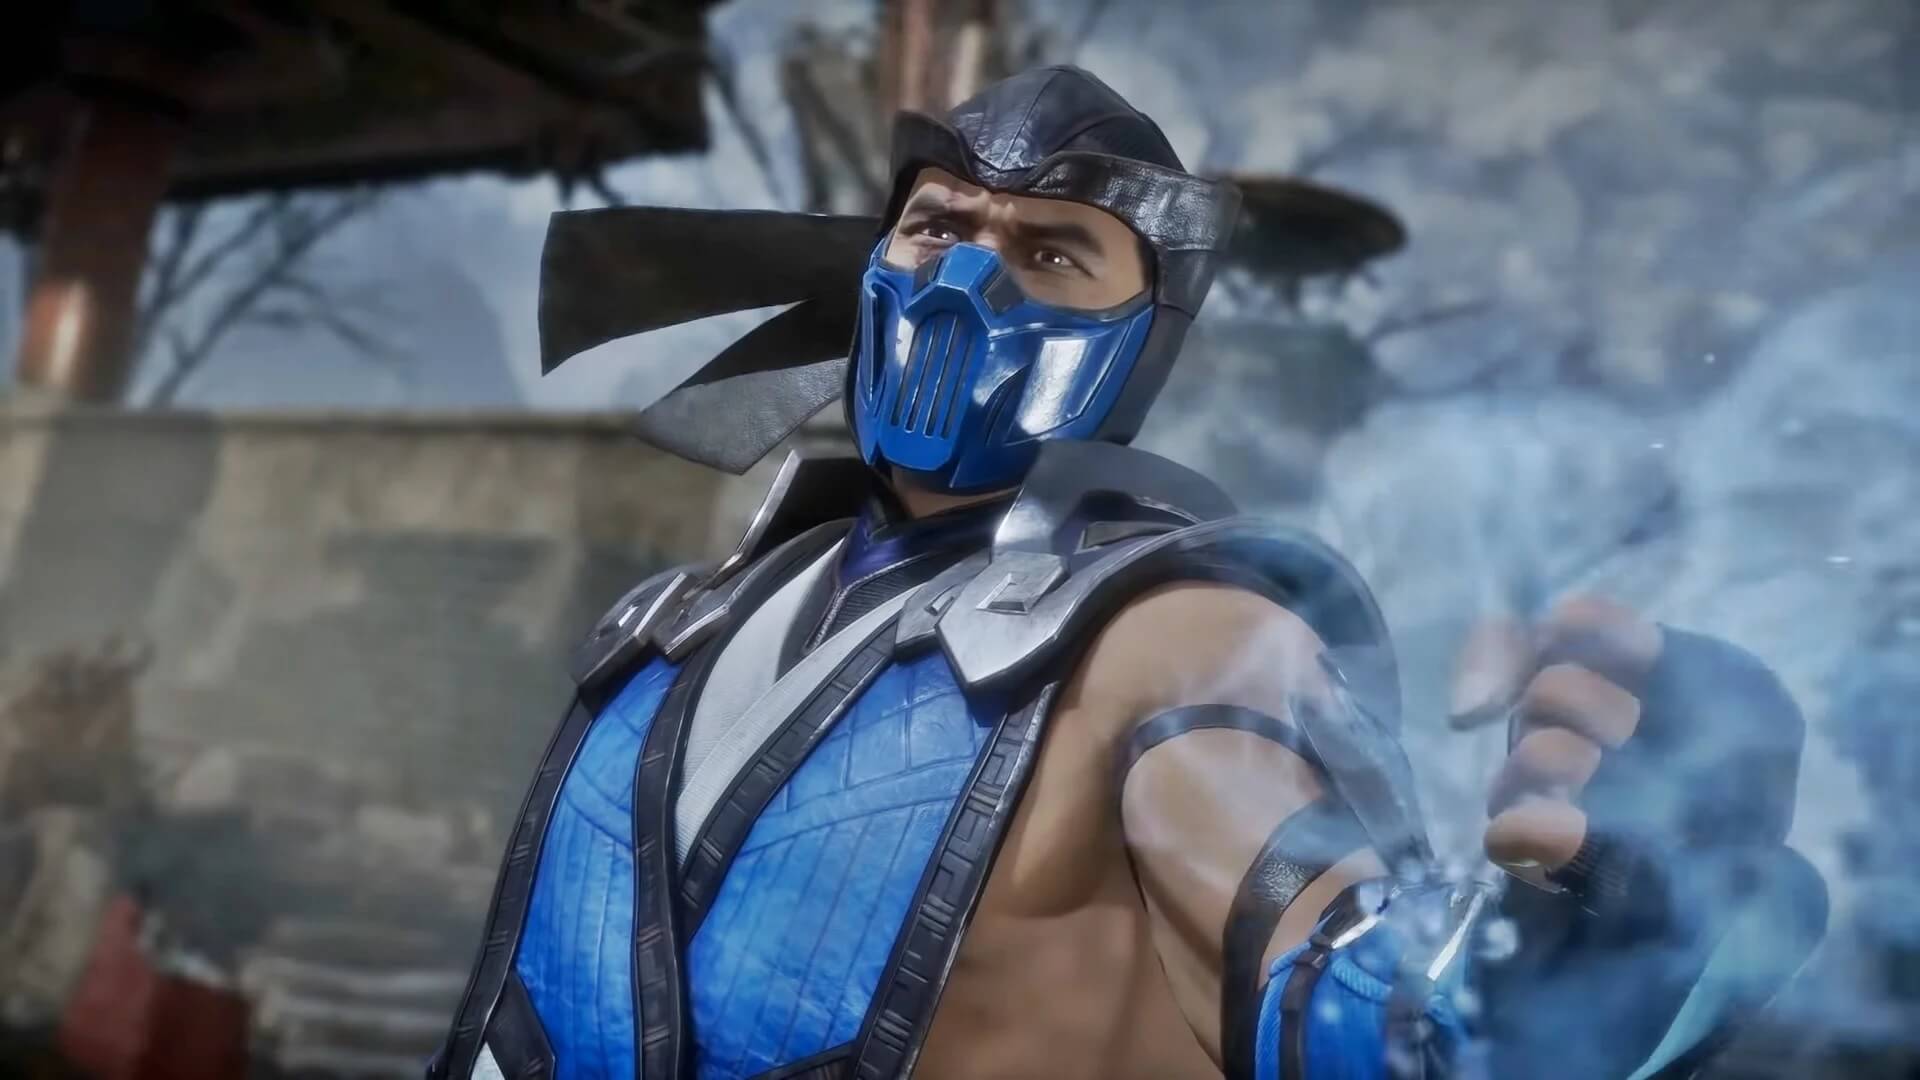 New Mortal Kombat 11 gameplay trailer features Shao Kahn